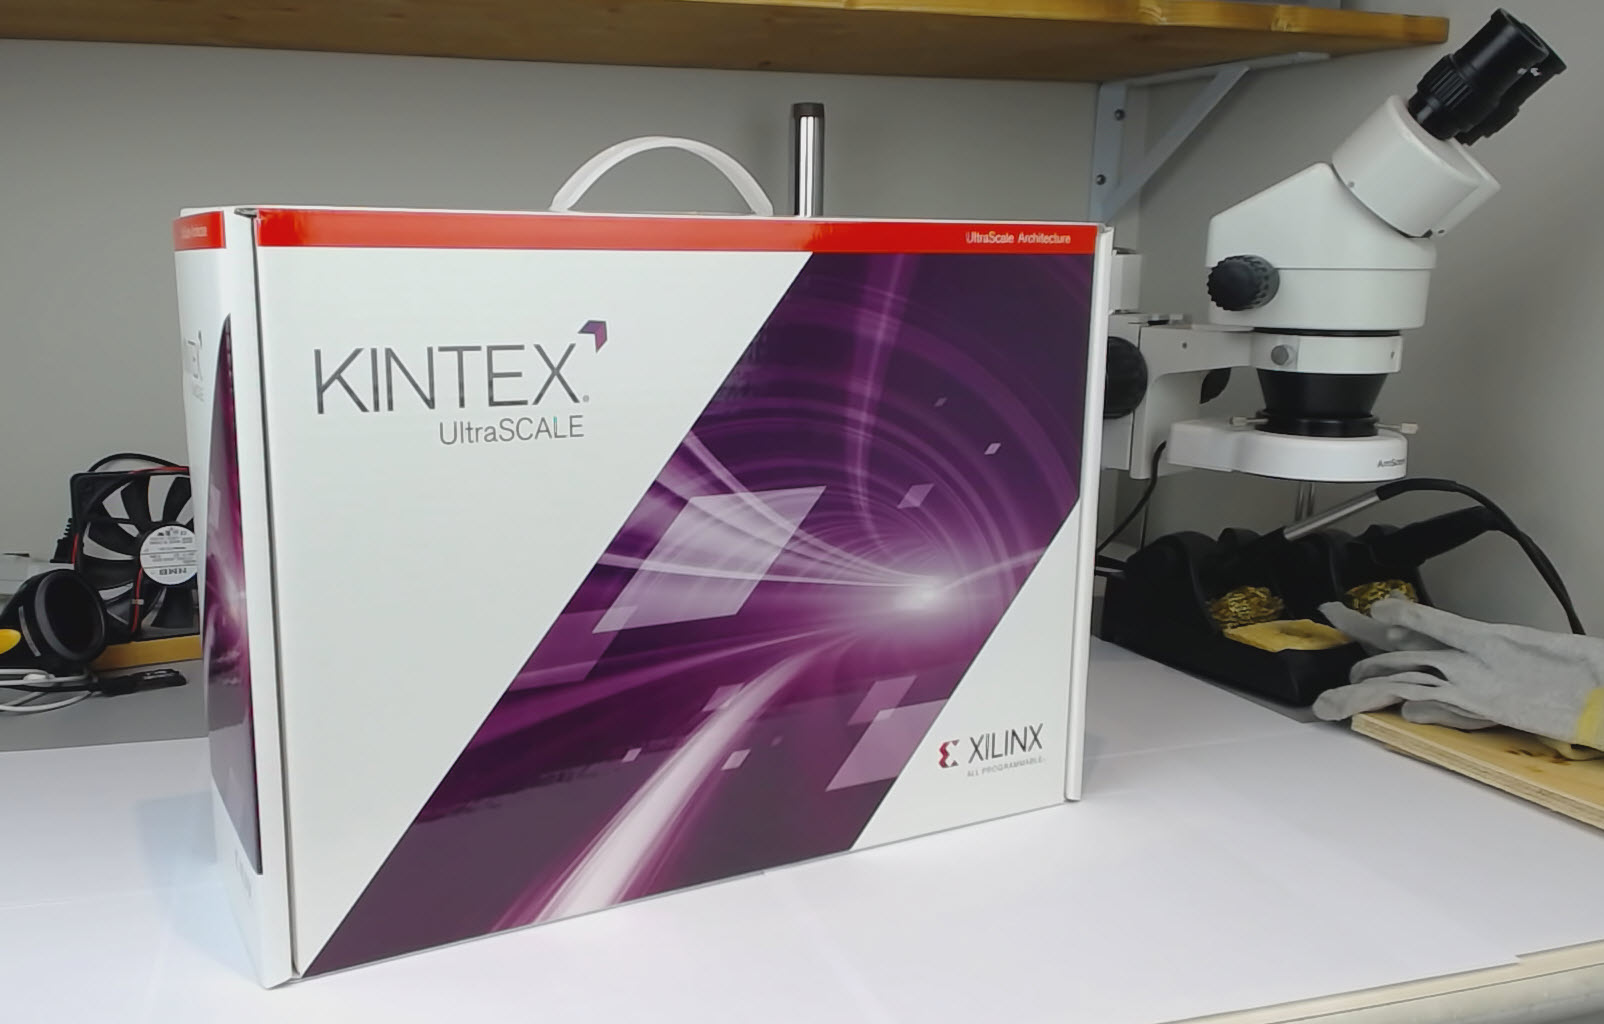 A quick look at the Kintex Ultrascale KCU105